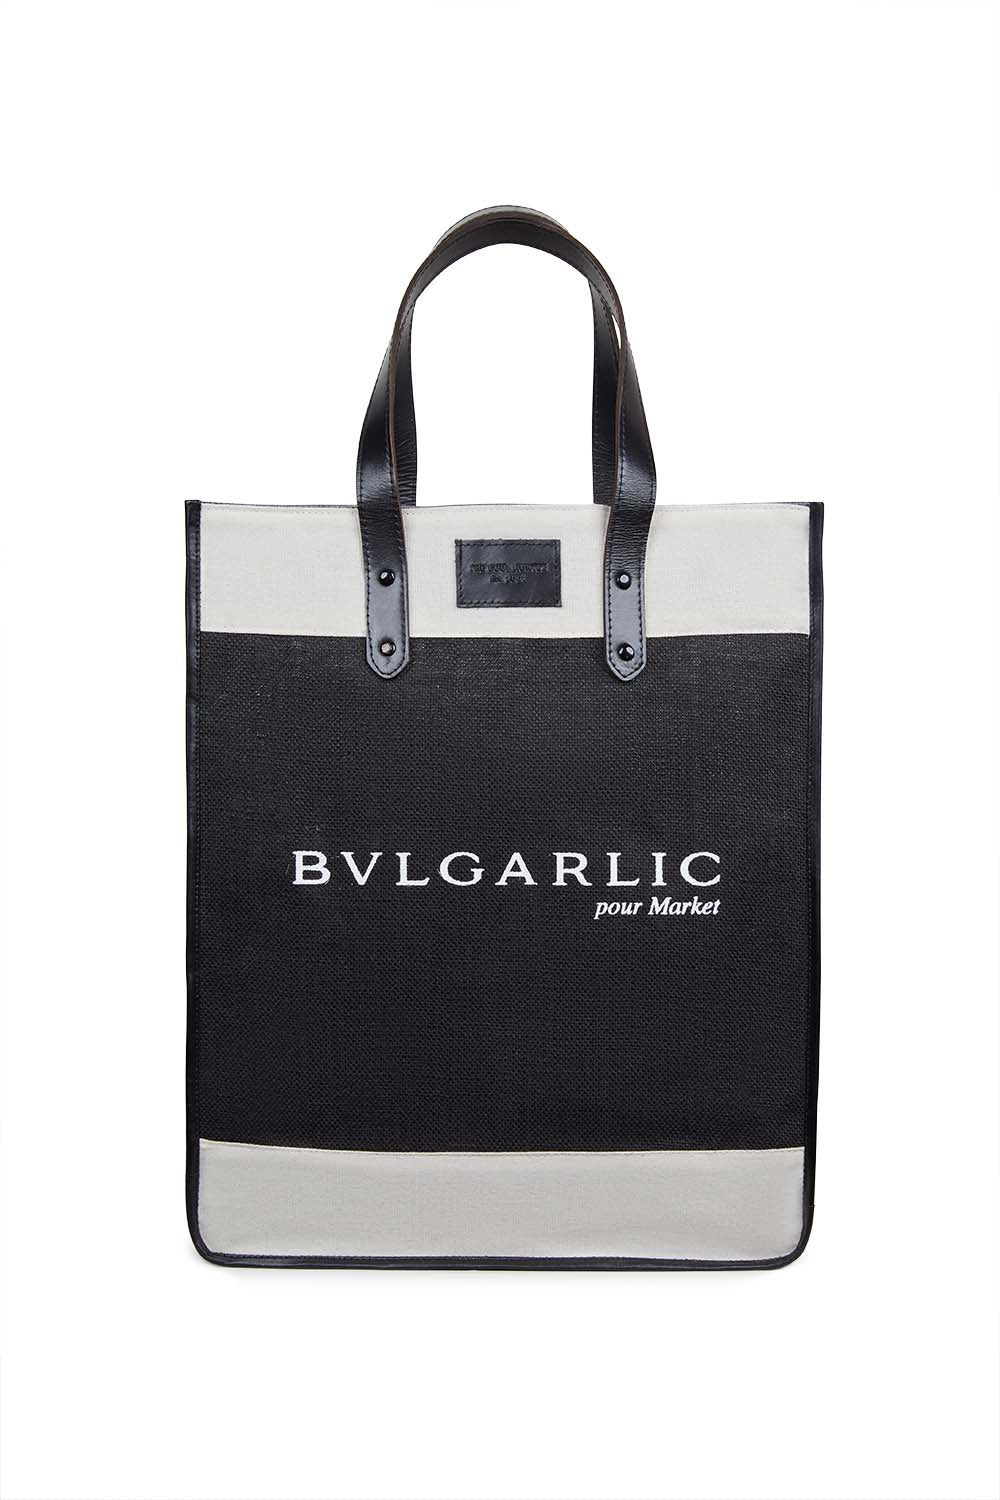 The Cool Hunter Market Bag Black Leather - Bvlgarlic - NEW